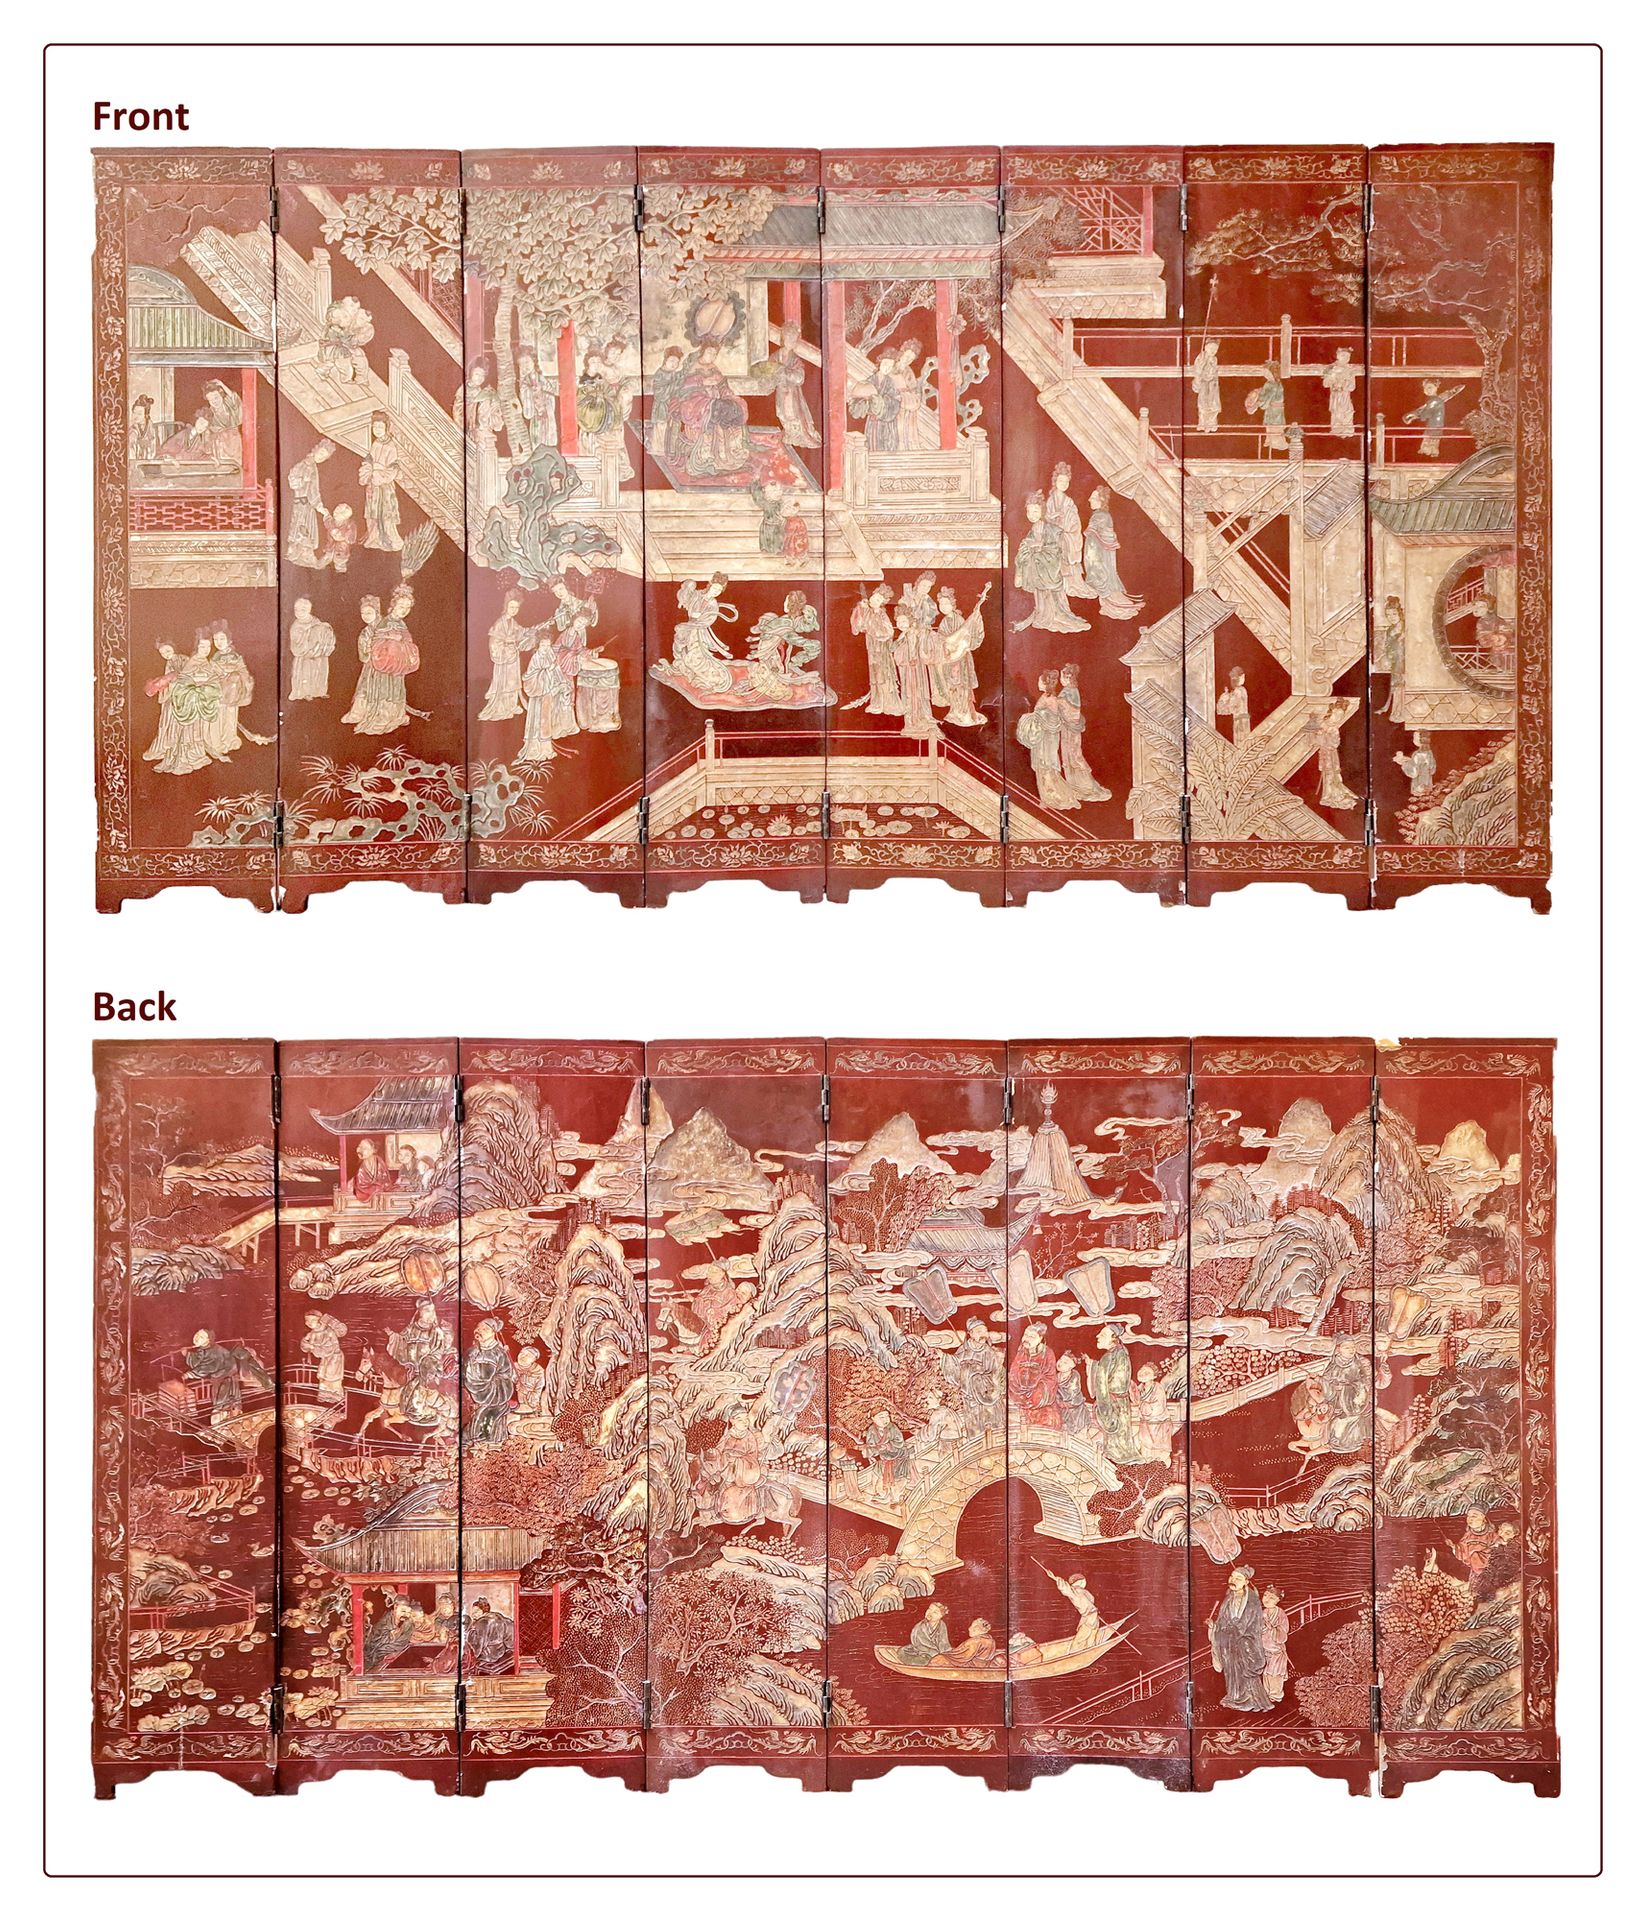 CHINE VERS 1900 优雅的折叠式屏幕



科罗曼德漆器，两边有八片叶子，装饰着宫廷场景。磨损和撕裂。

尺寸：92 x 172 cm